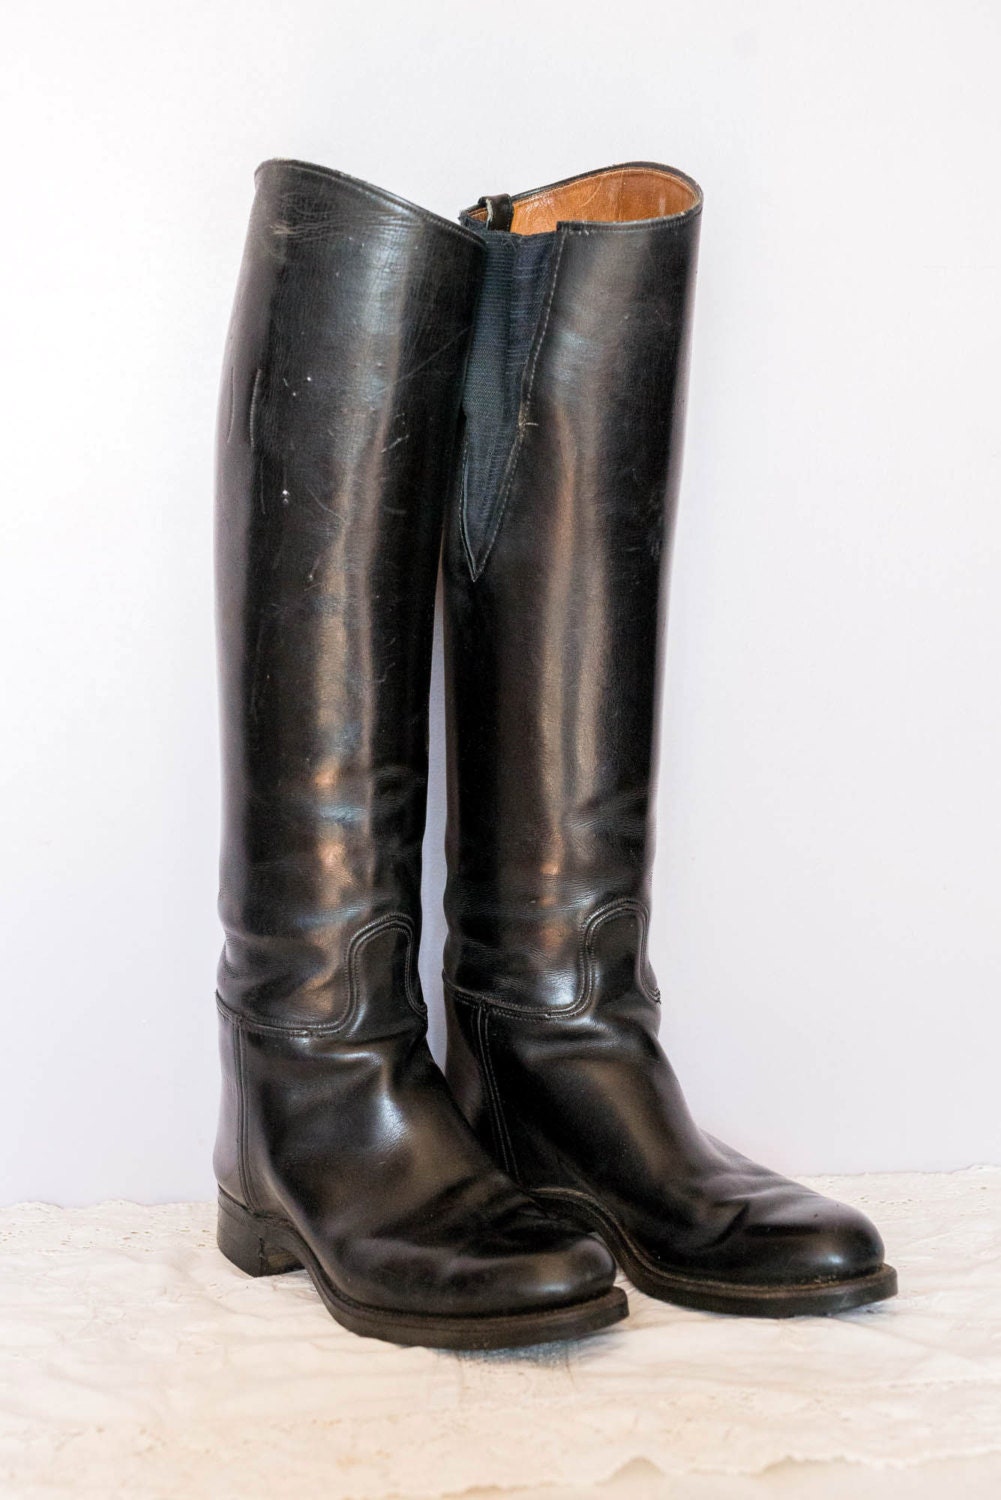 Vintage Equestrian Boots 93